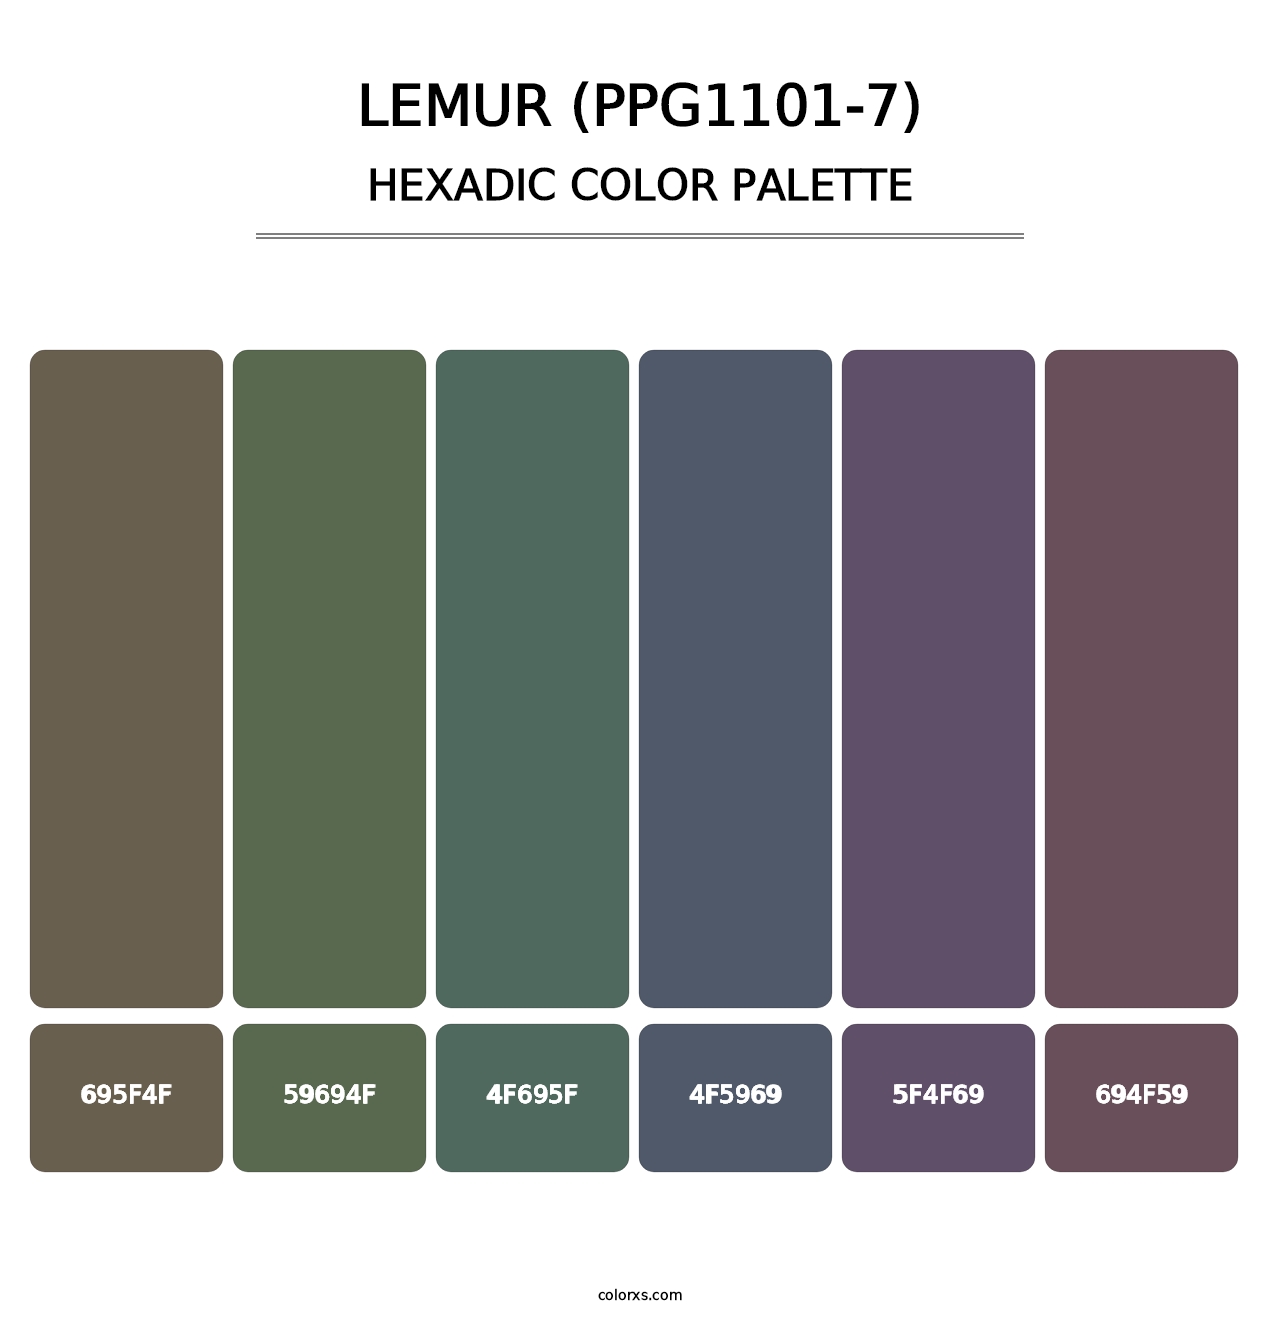 Lemur (PPG1101-7) - Hexadic Color Palette